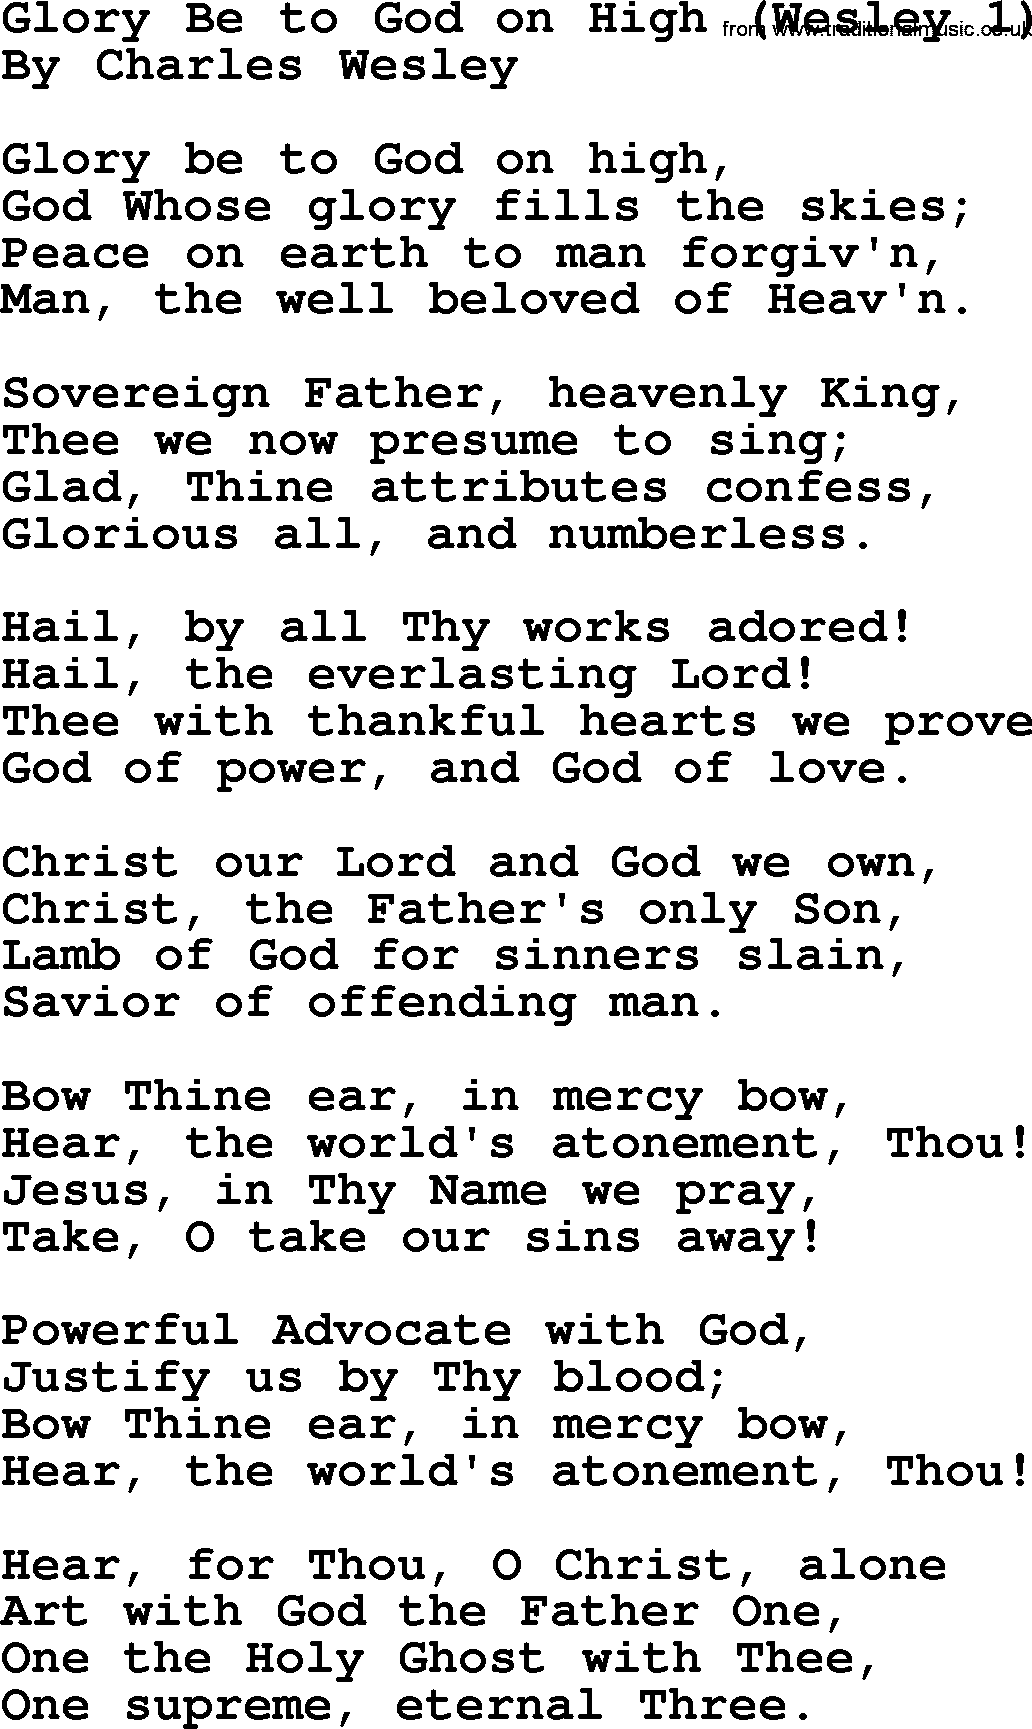 Charles Wesley hymn: Glory Be to God on High (Wesley 1), lyrics